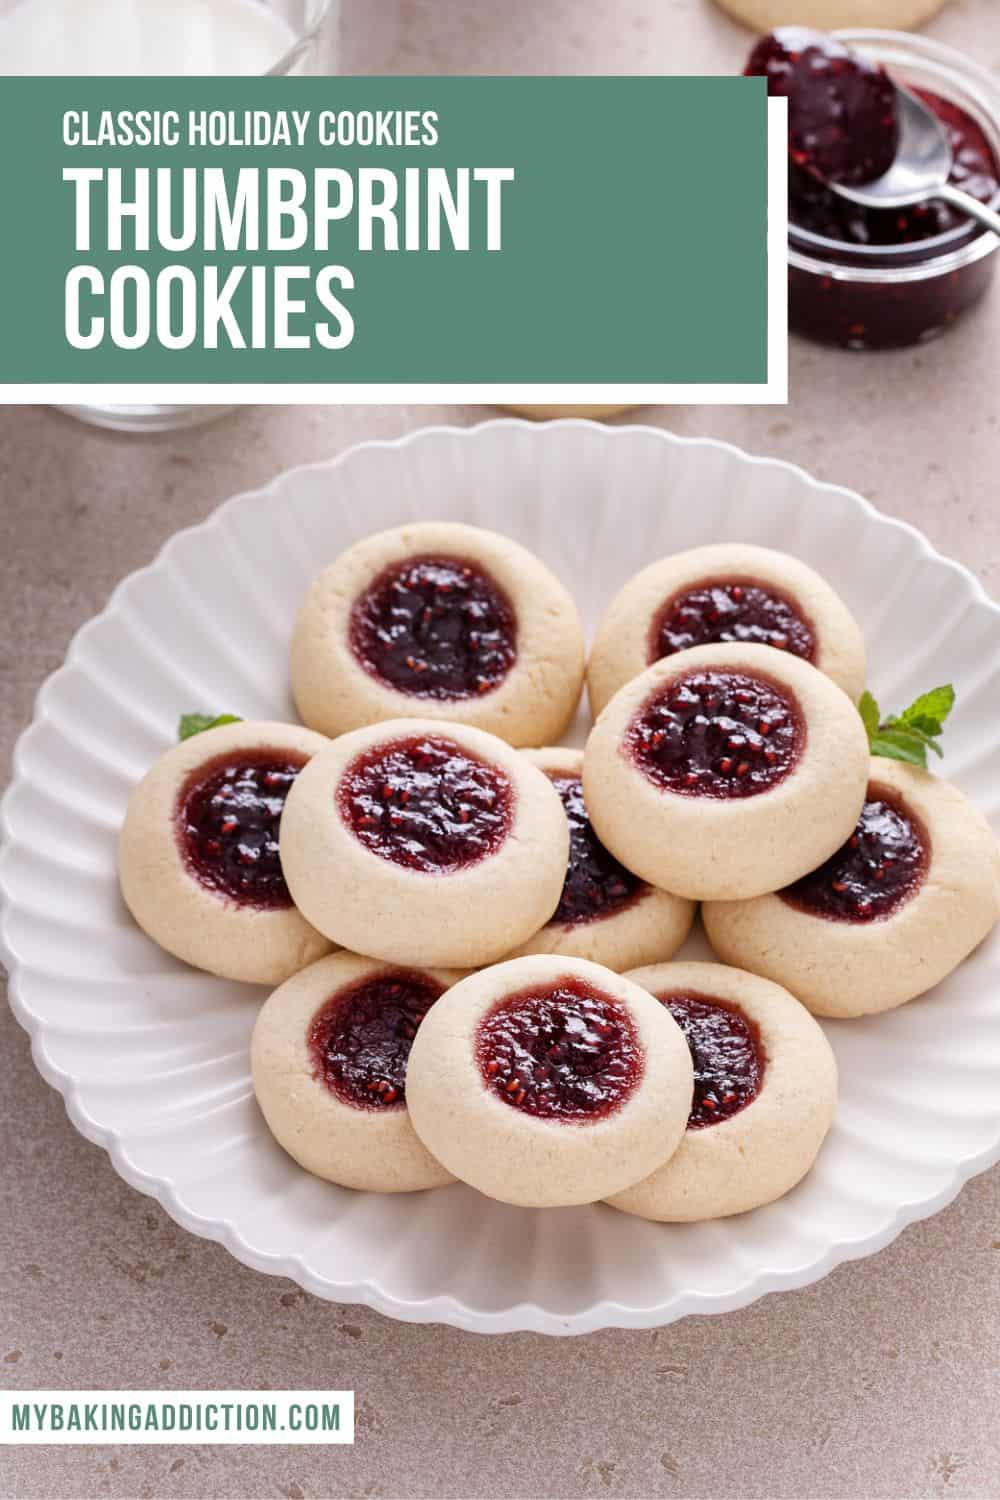 Thumbprint Cookies - My Baking Addiction